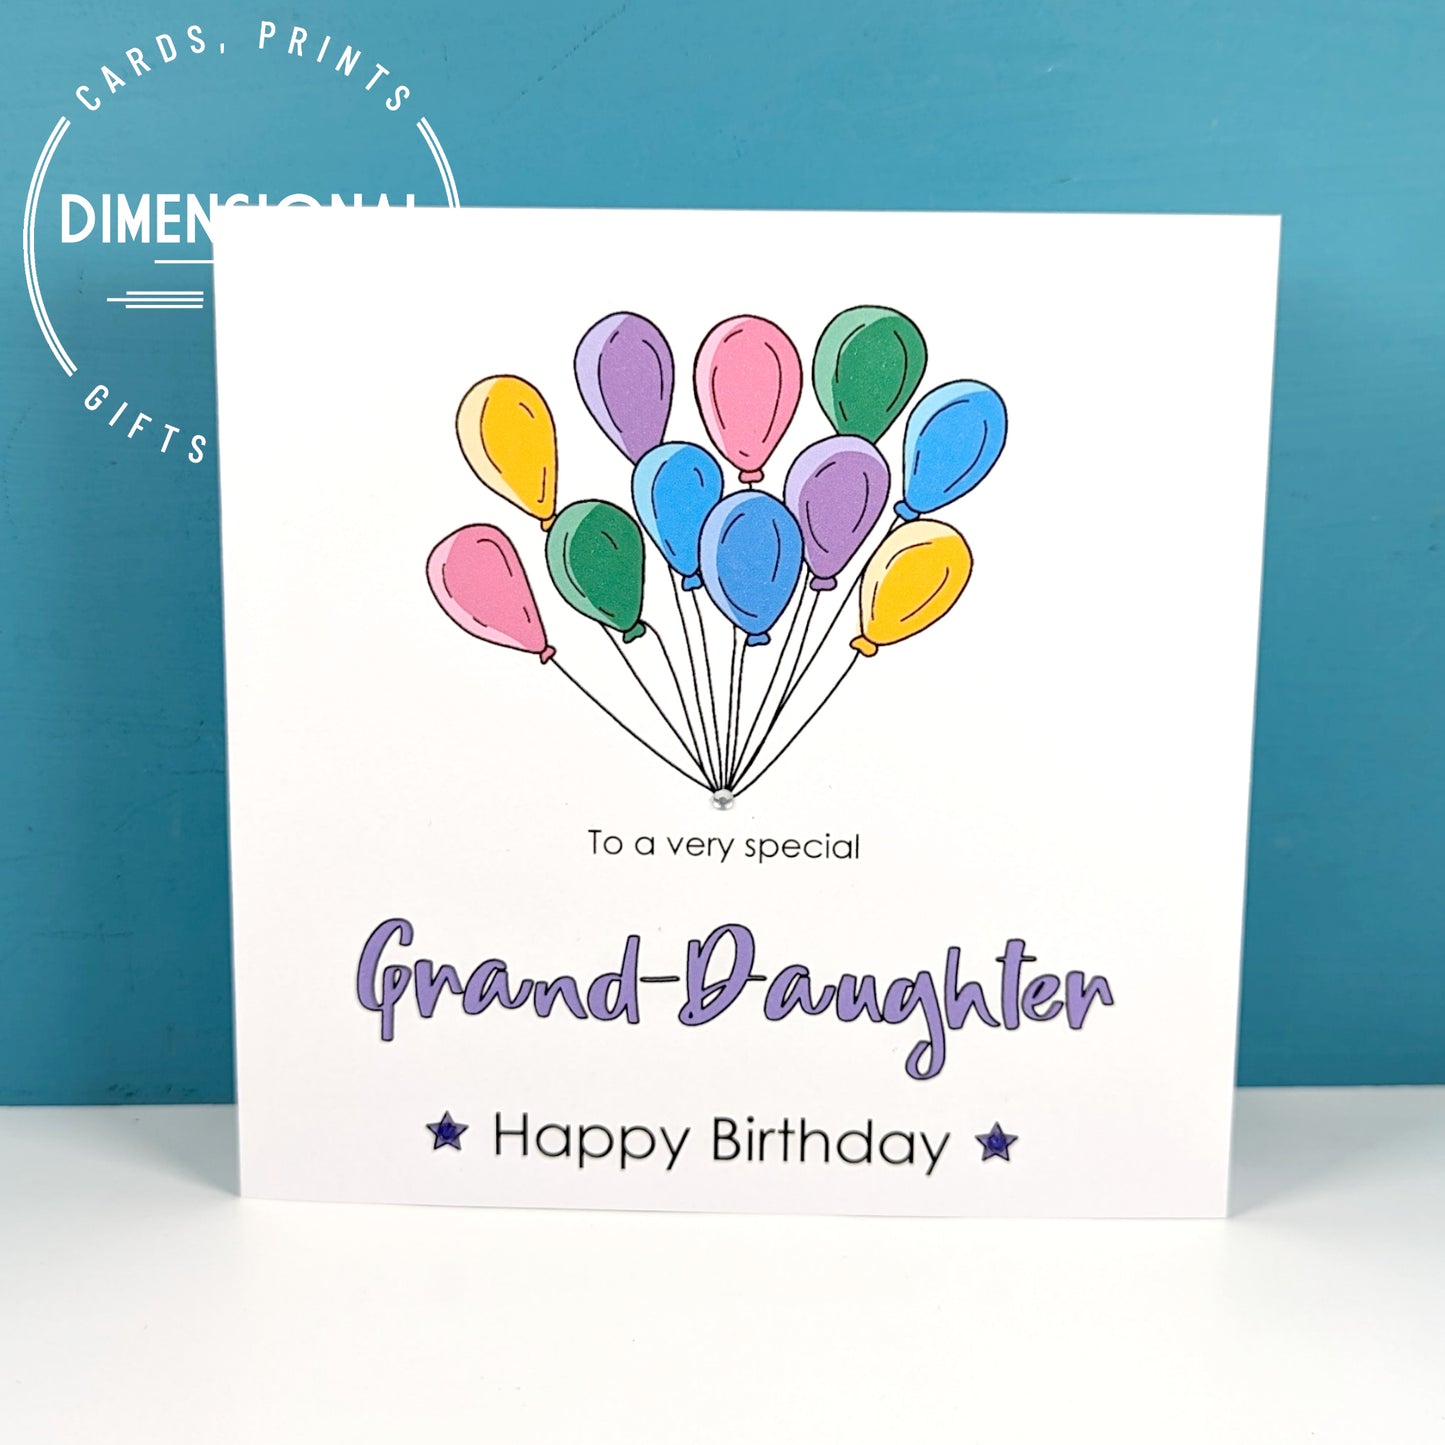 GRAND-DAUGHTER Birthday Card